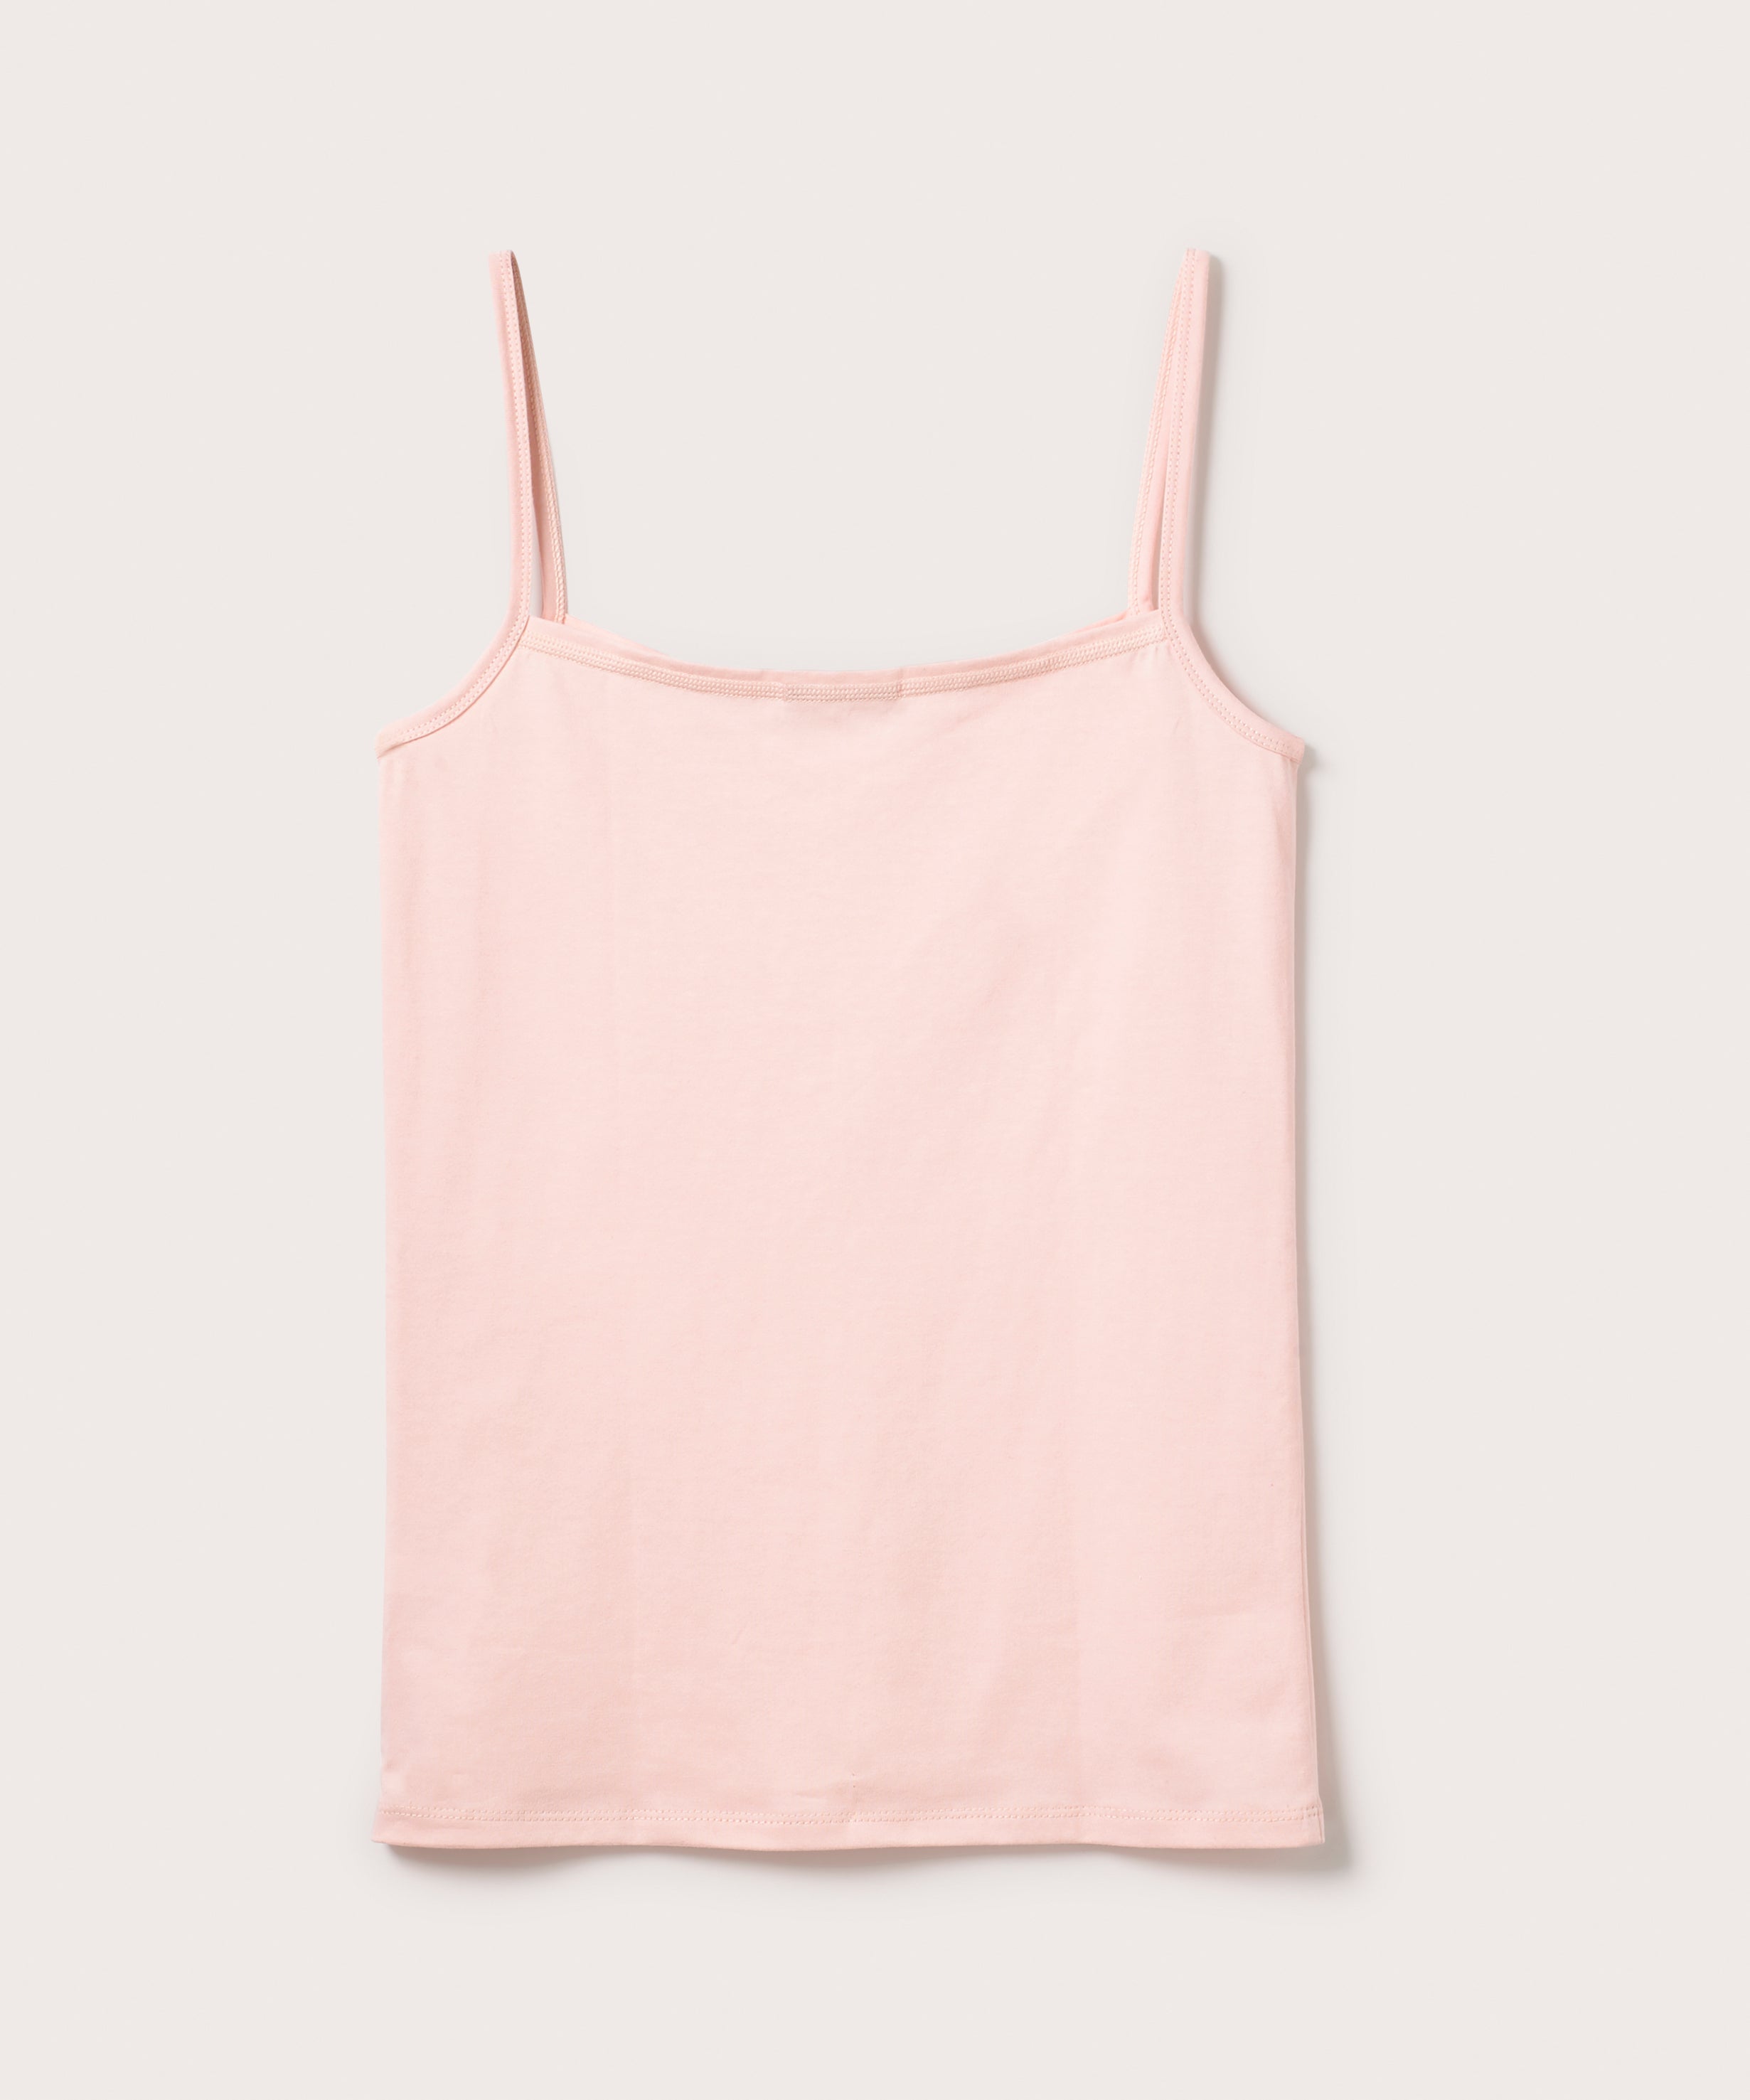 Tank Top Vest Top Camisole Sando Spaghetti Top for Women Pink